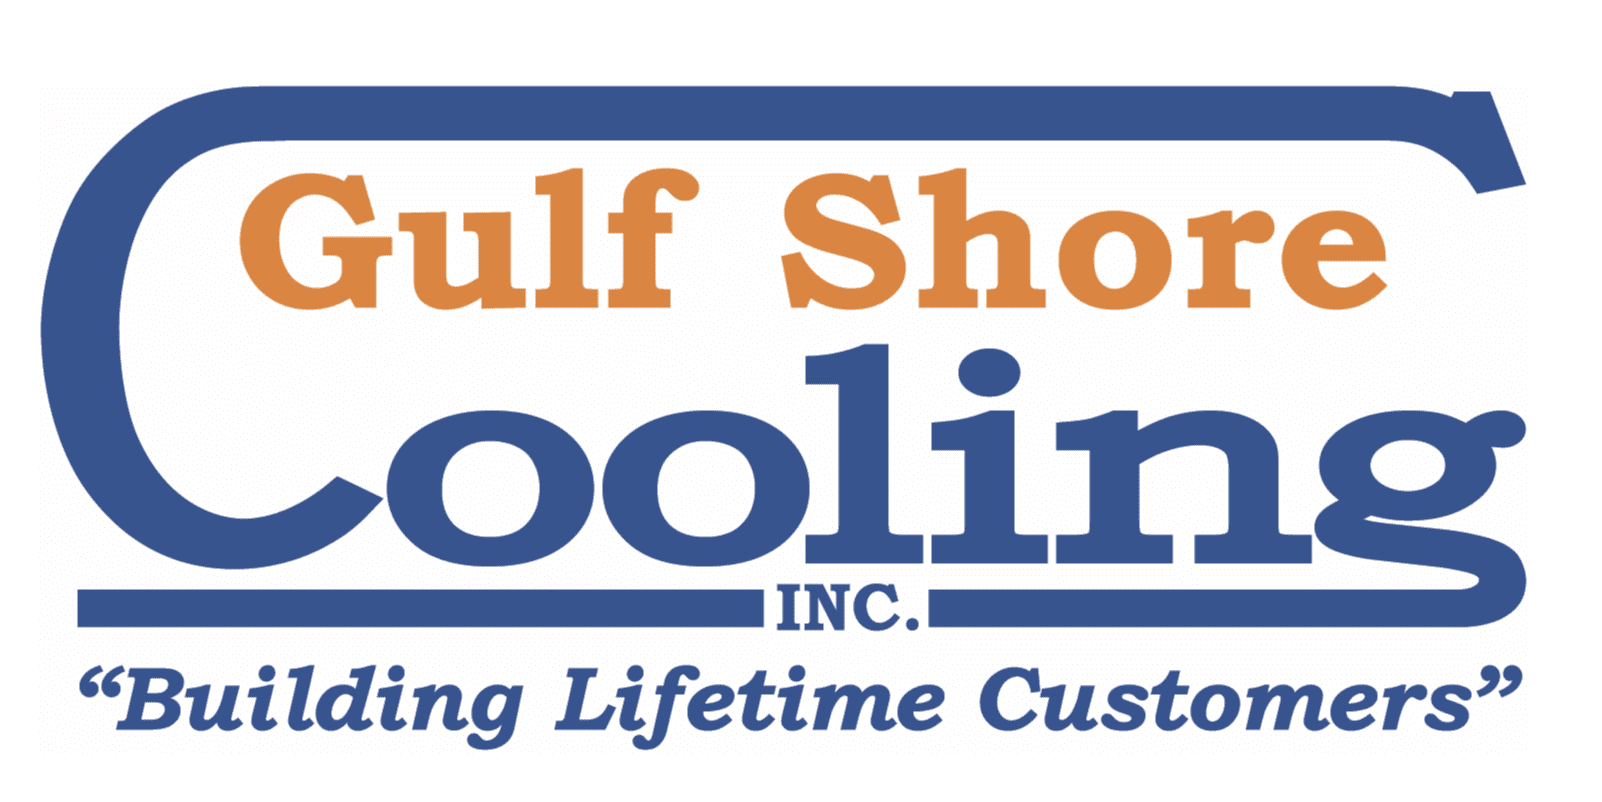 Gulf Shore Cooling logo